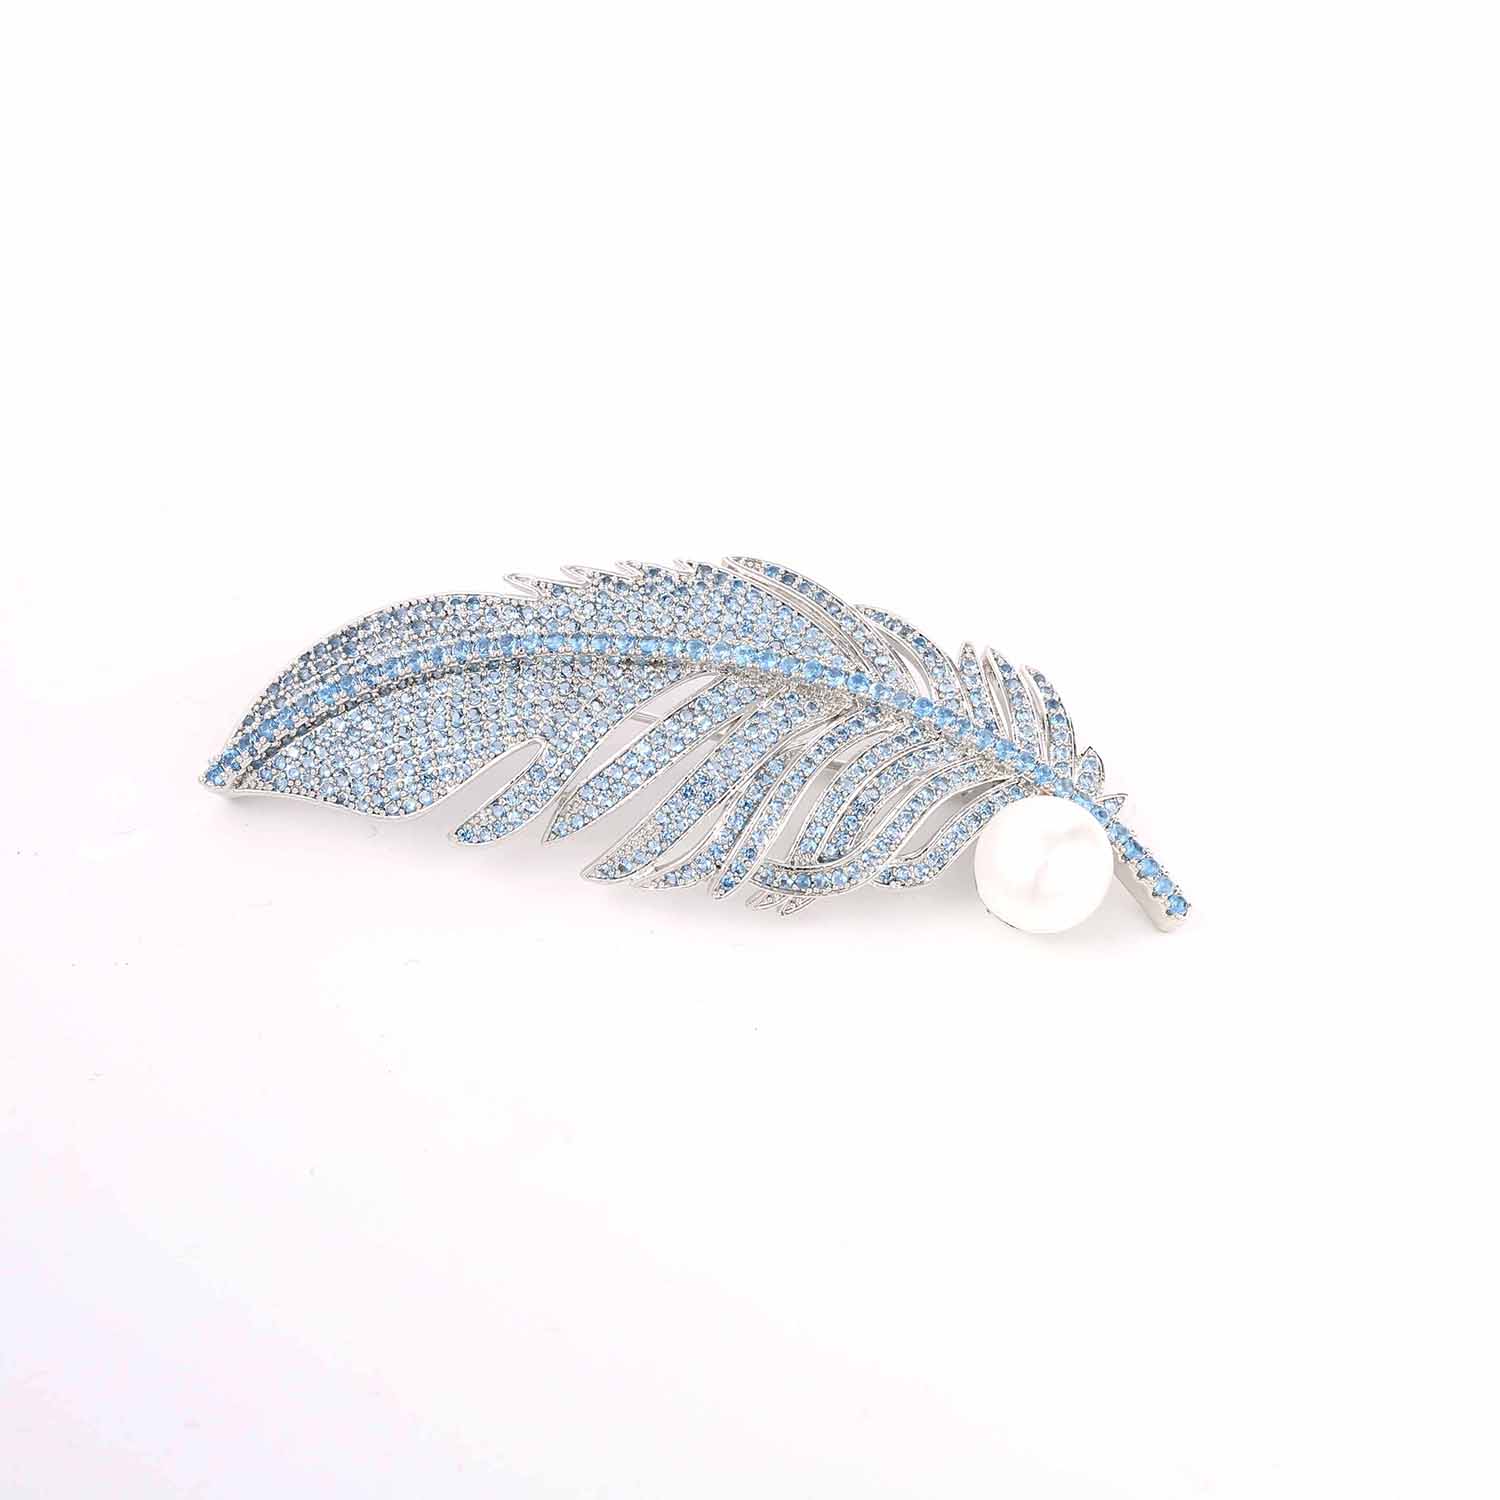 Broche en plumes de zirconium micro incrustée, corsage de luxe exquis et léger